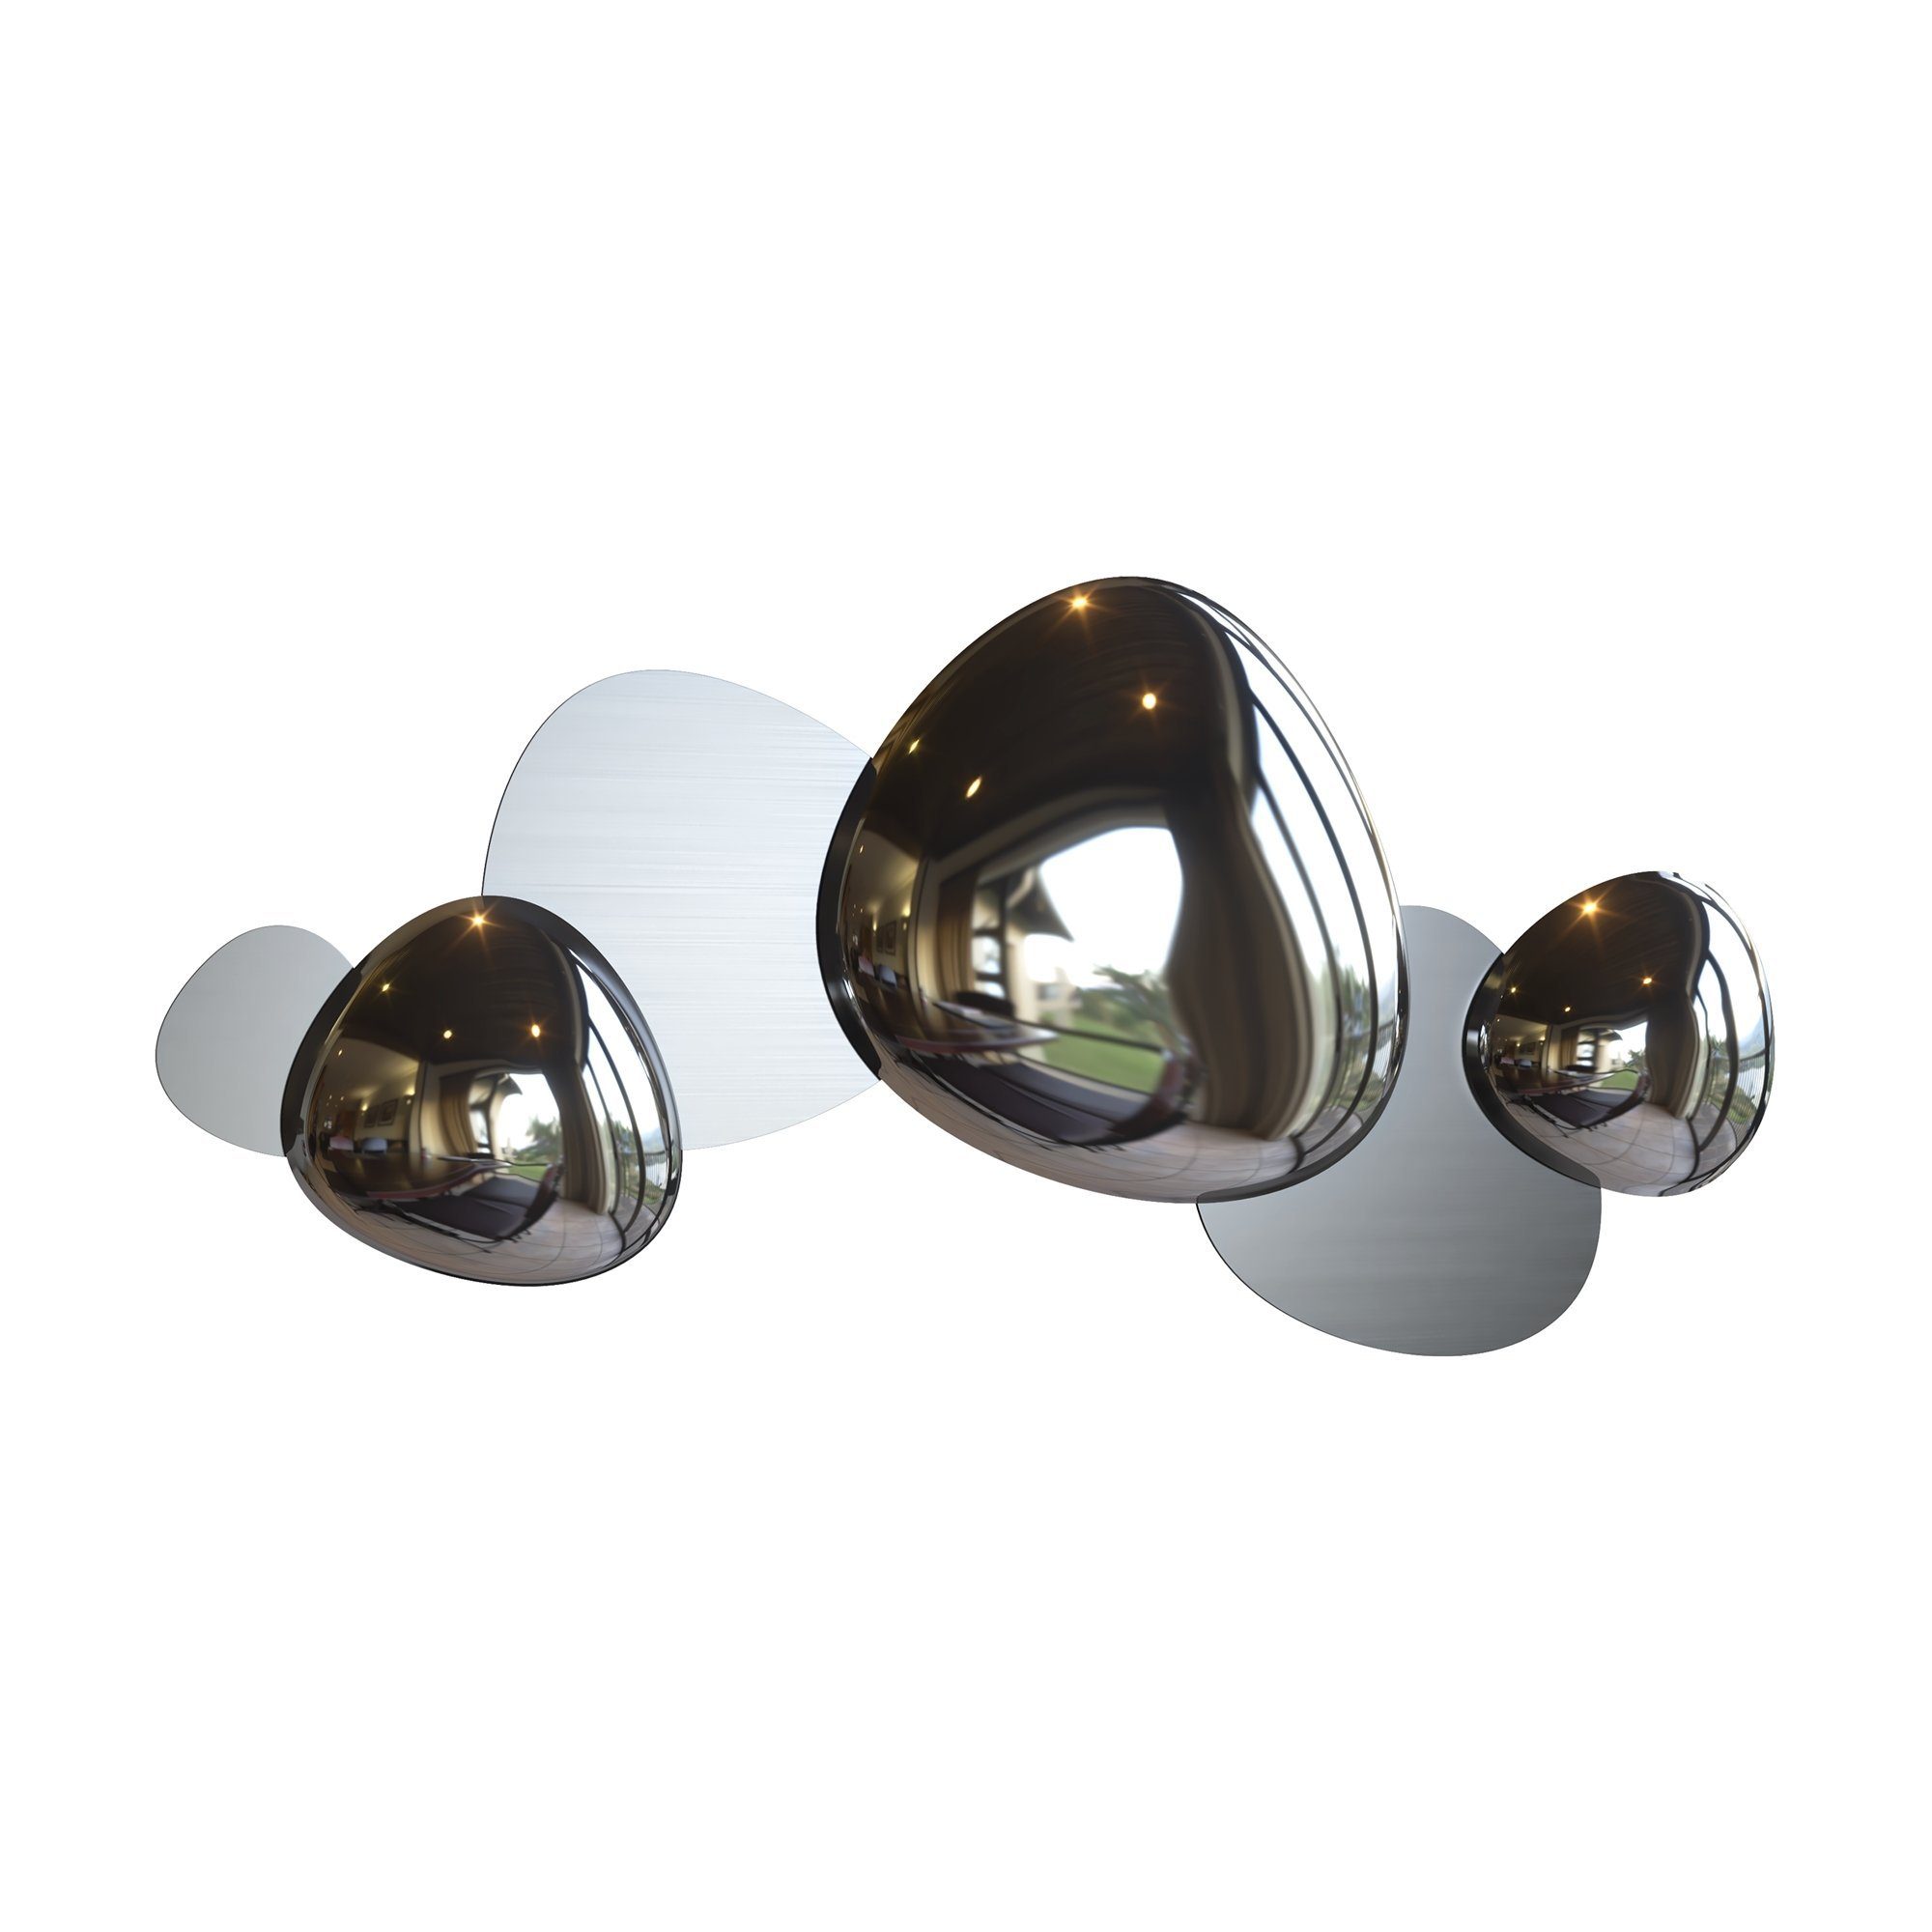 MAYTONI DECORATIVE LIGHTING Wandleuchte integriert, fest Lampe 79x37.1x7.4 cm, hochwertige Jack-stone Raumobjekt & dekoratives Design LED 3